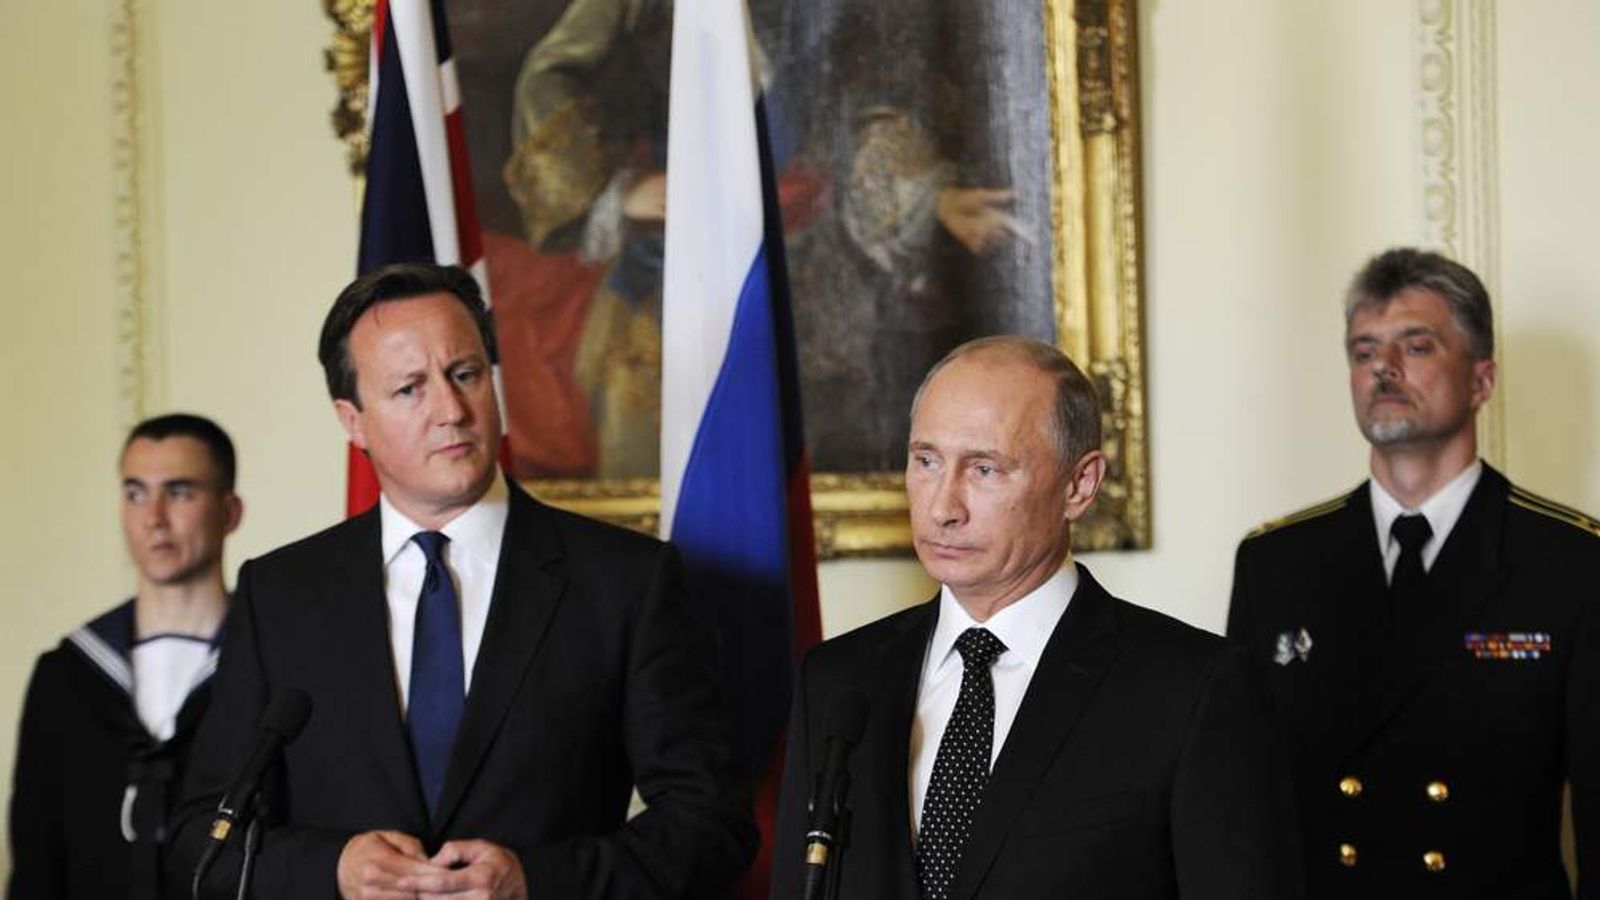 Putin: 'Blood On Hands Of Both Syria Sides' | Politics News | Sky News